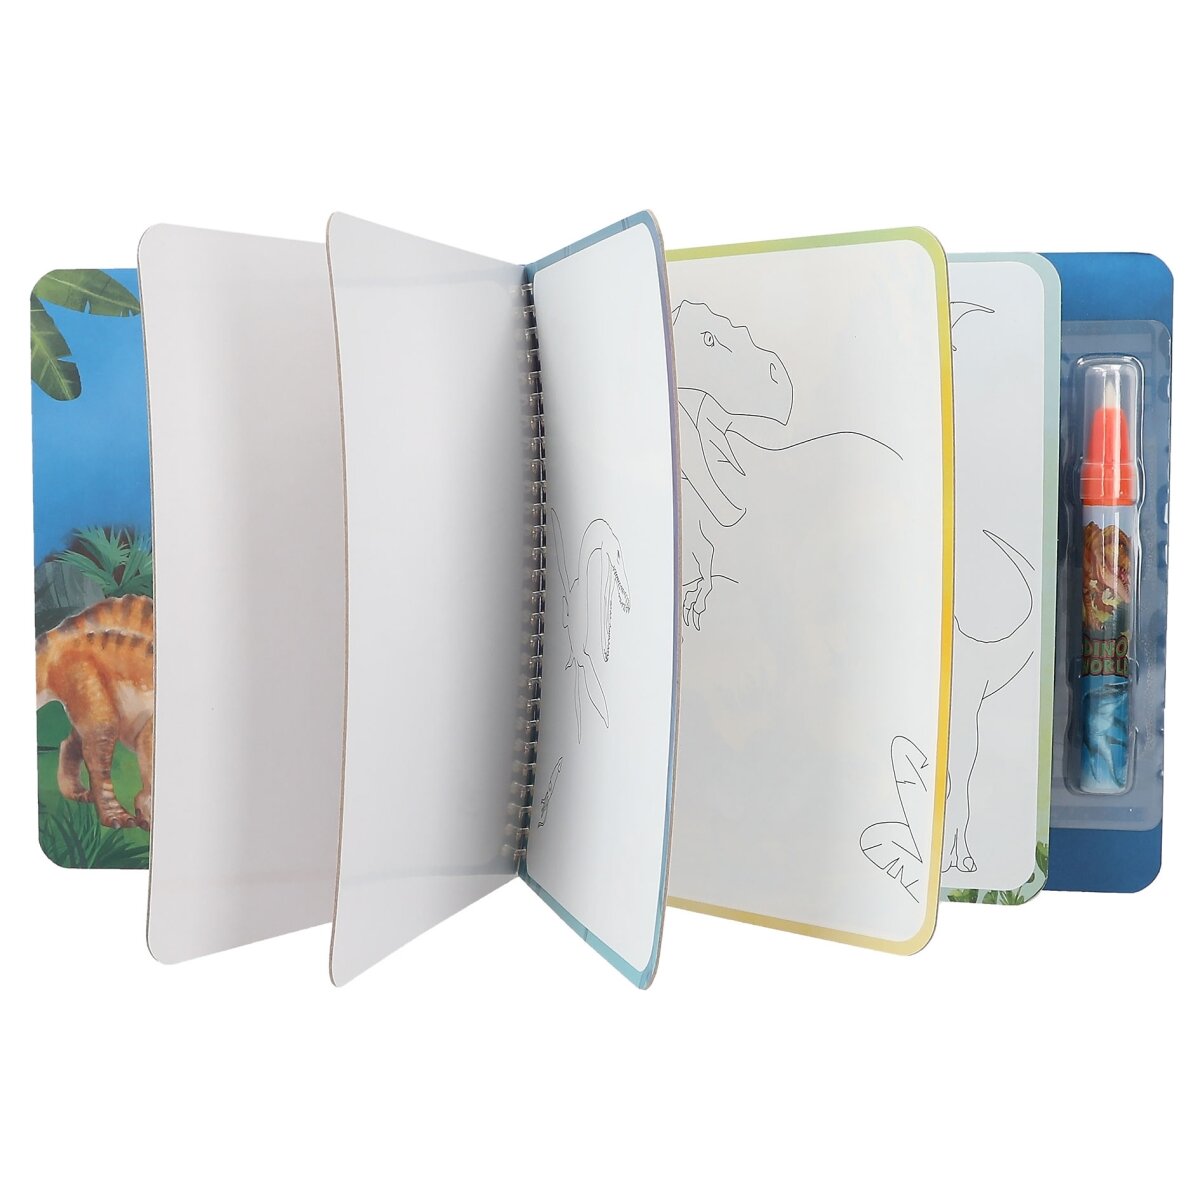 Depesche Dino World Aqua Magic Book